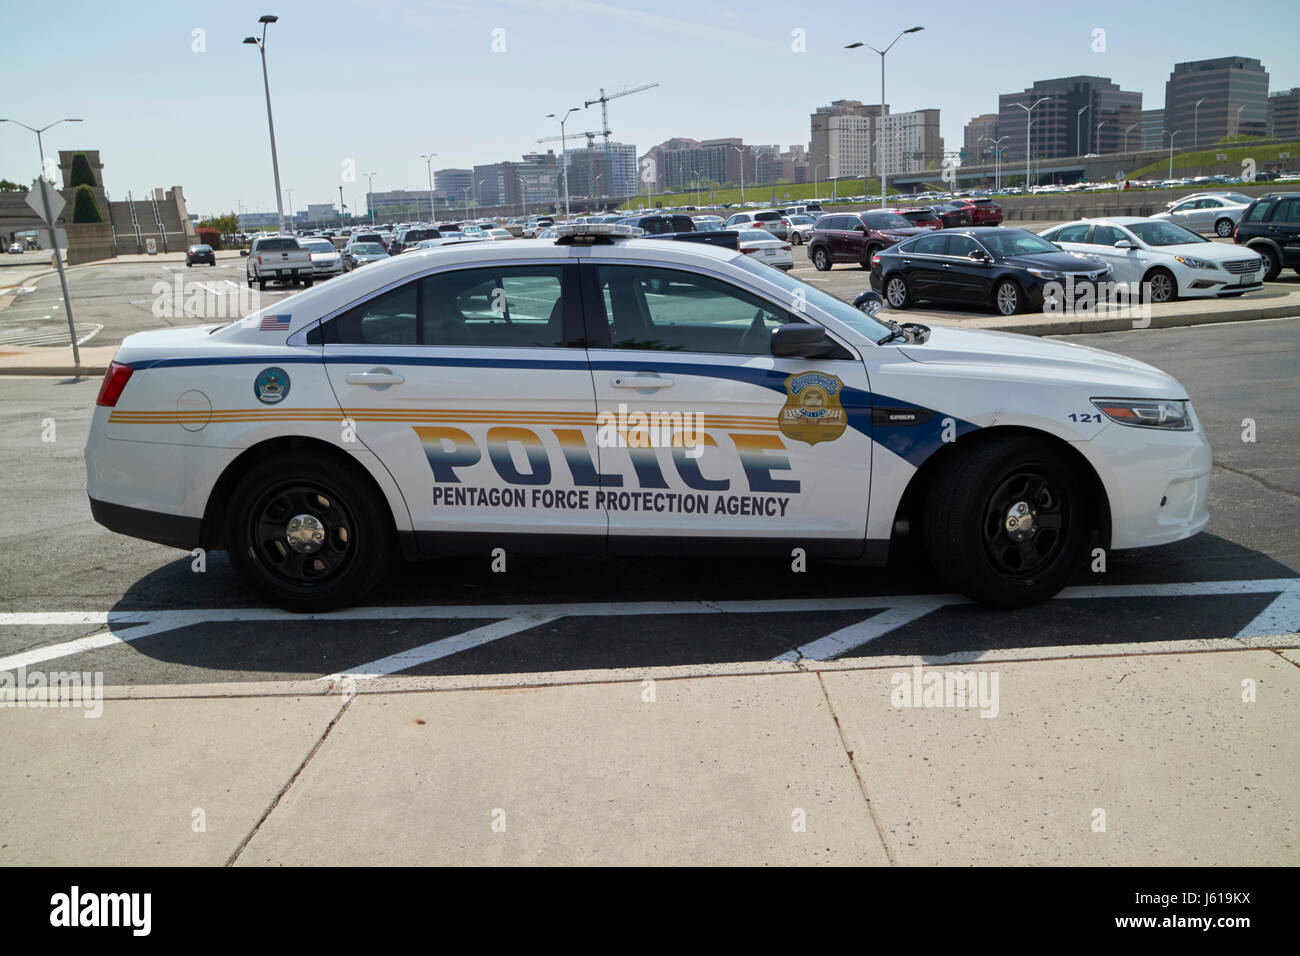 das Pentagon Polizei Schutz Agentur Streifenwagen Washington DC USA Stockfoto